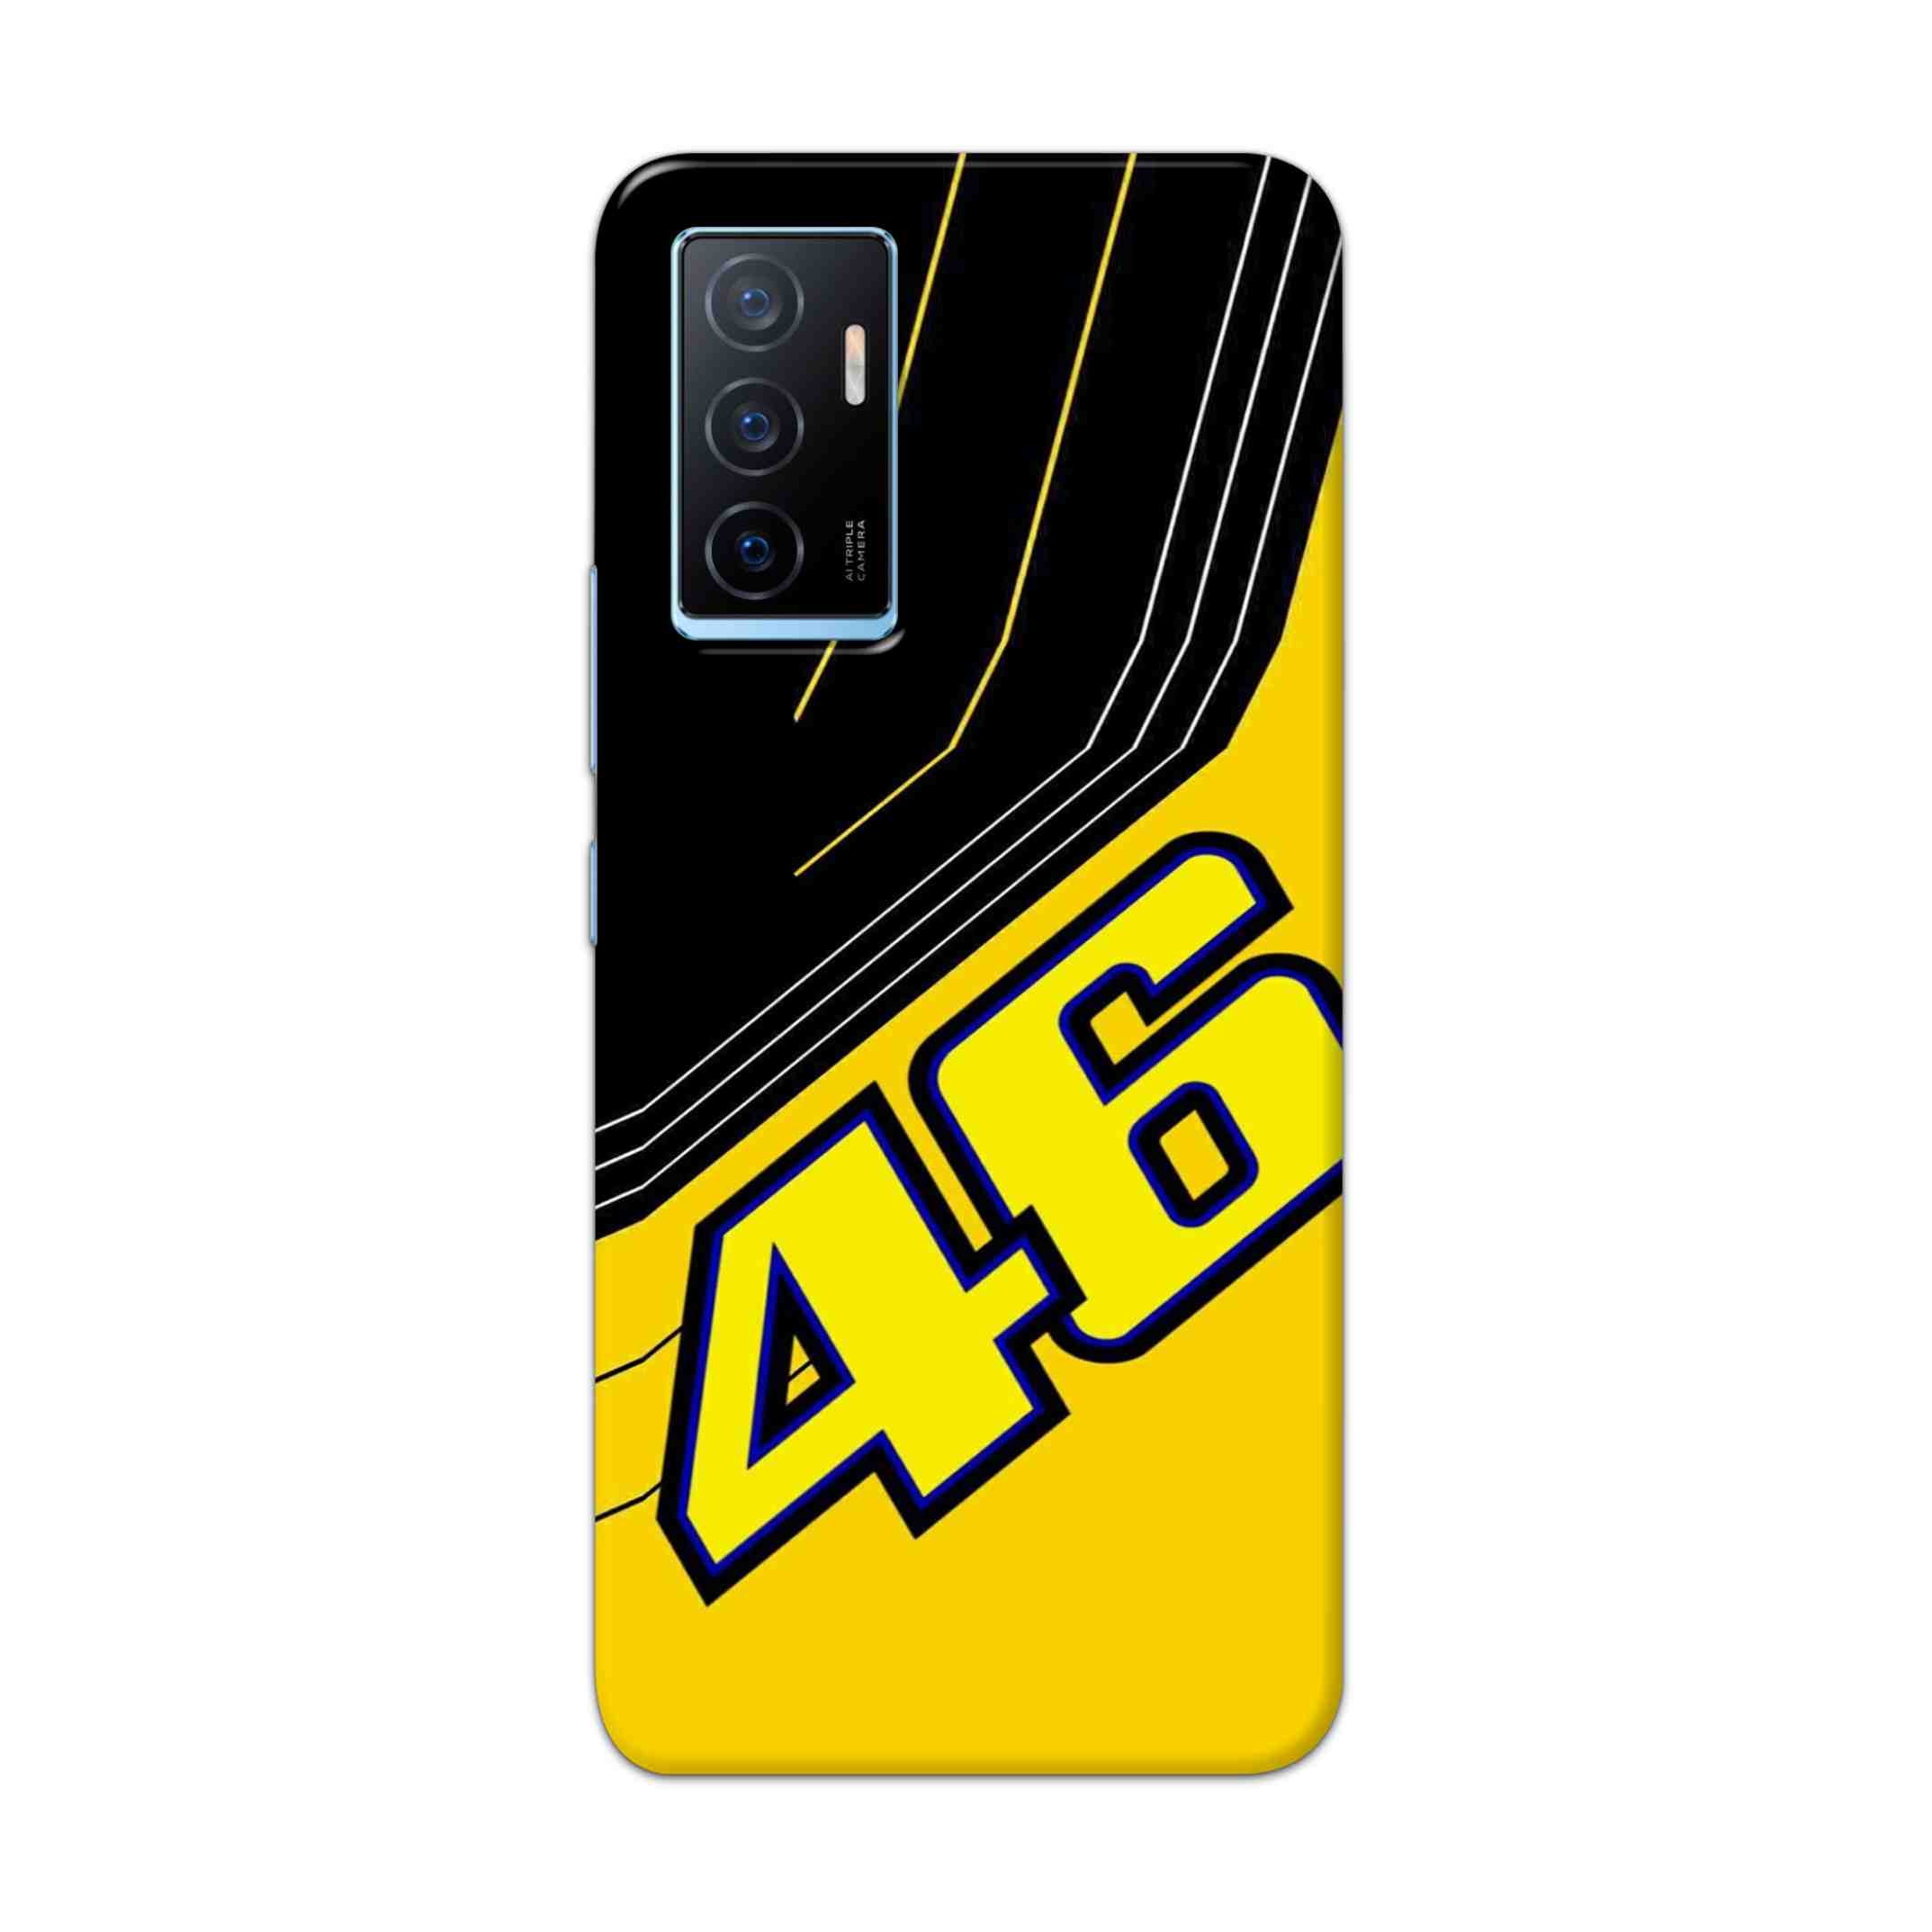 Buy 46 Hard Back Mobile Phone Case Cover For Vivo Y75 4G Online